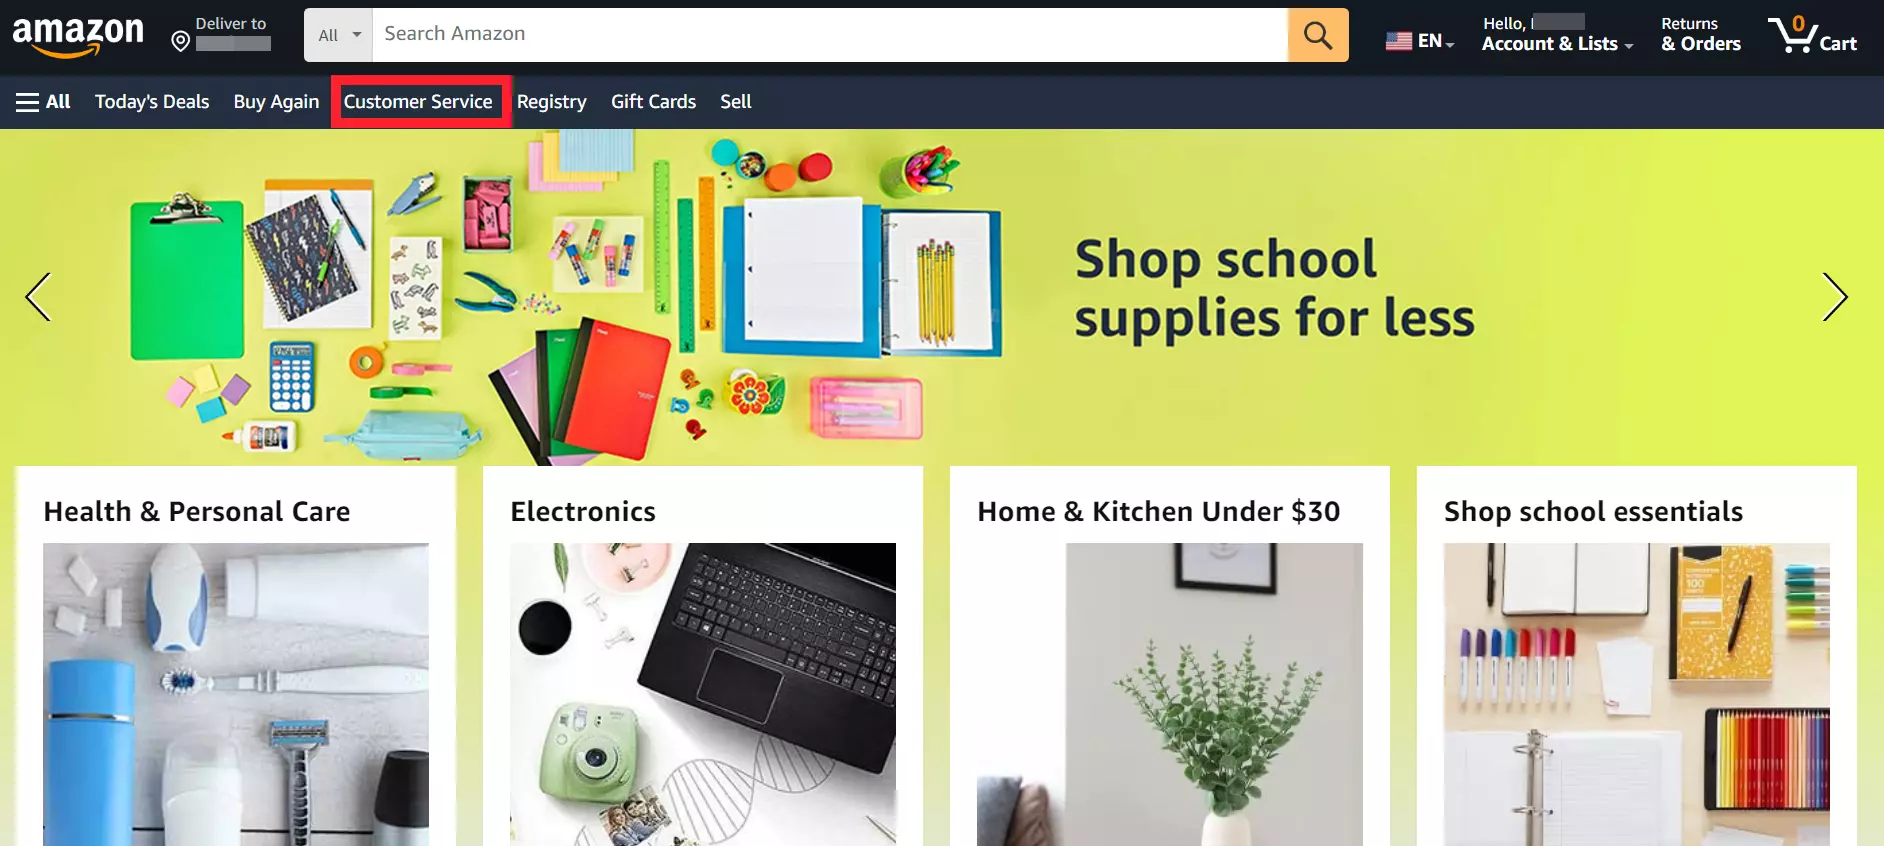 Amazon Customer Service